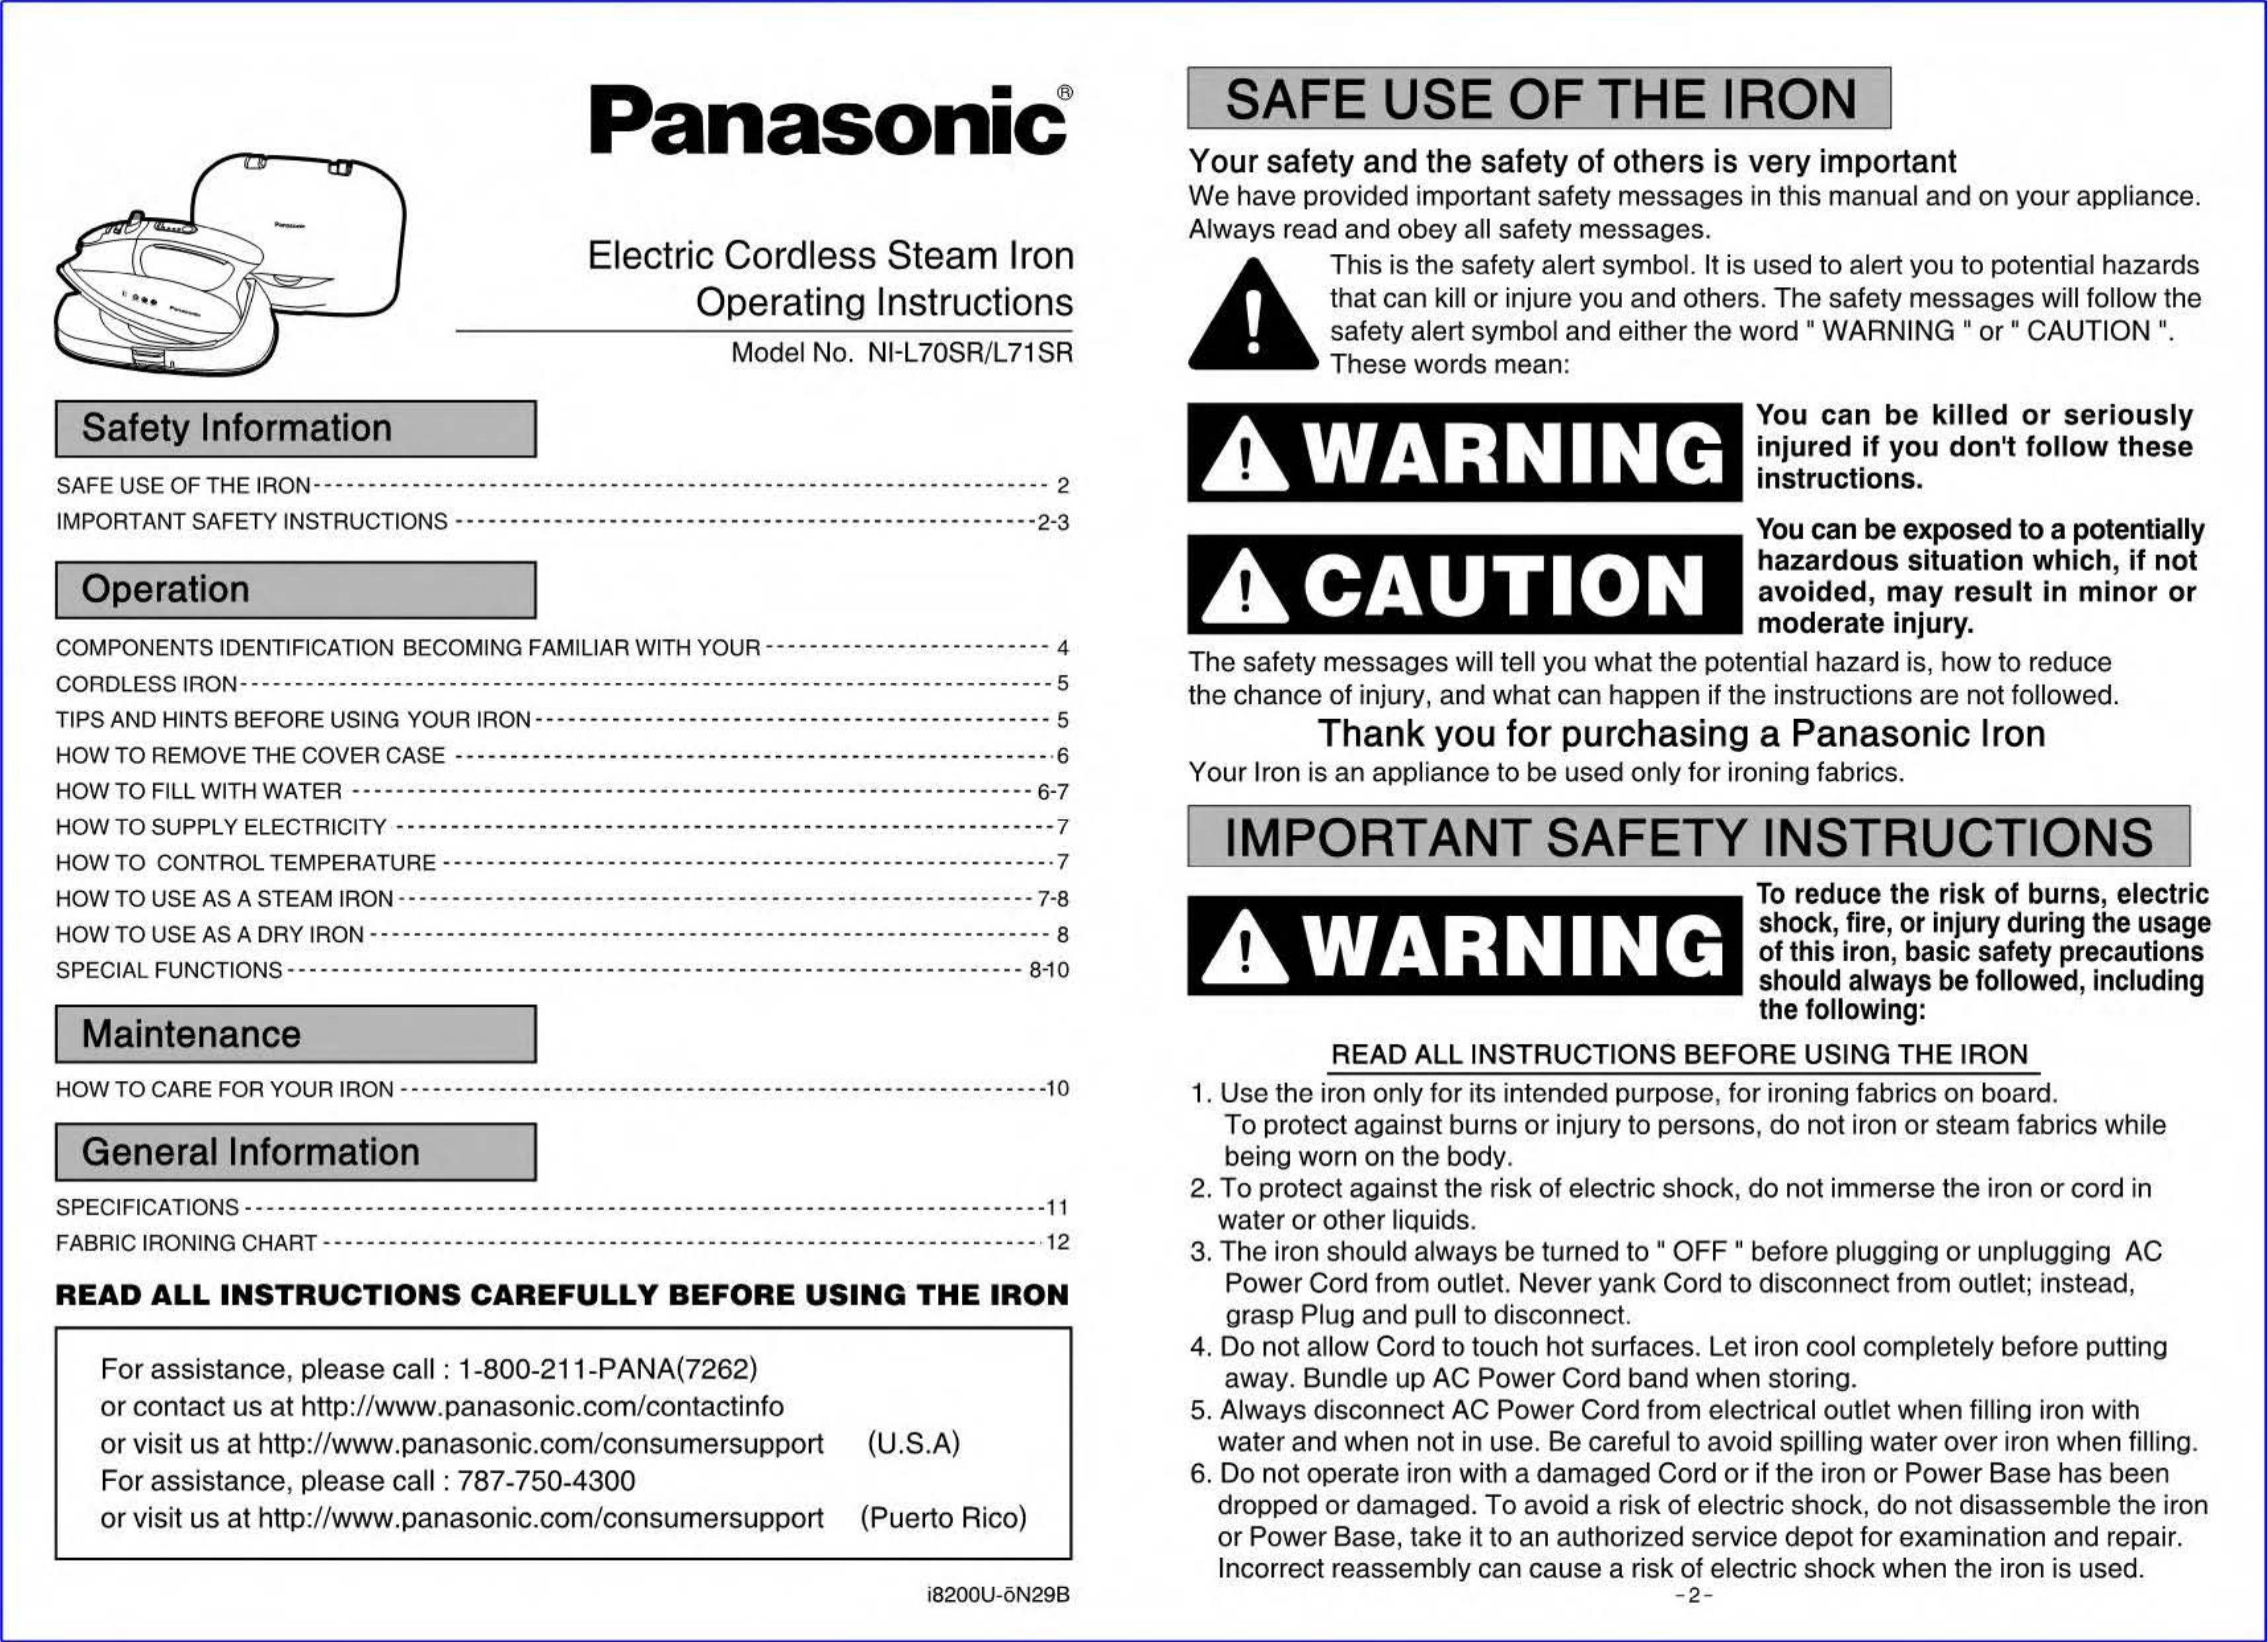 Panasonic L71SR Iron User Manual